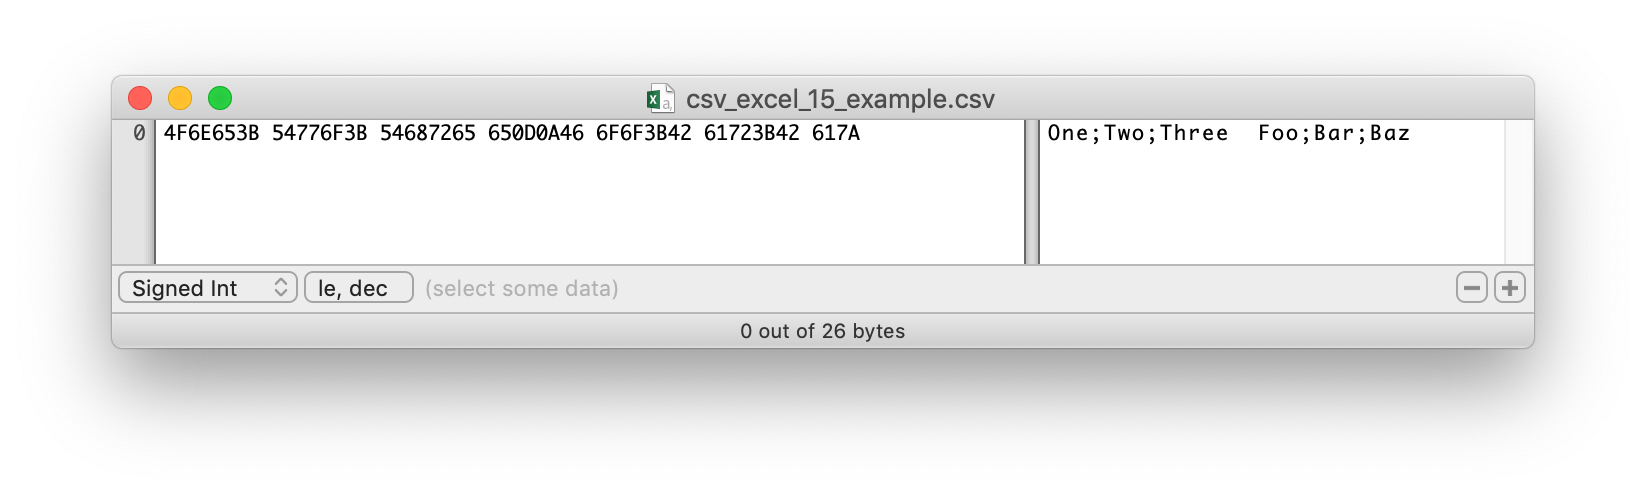 csv_excel_15_example.csv